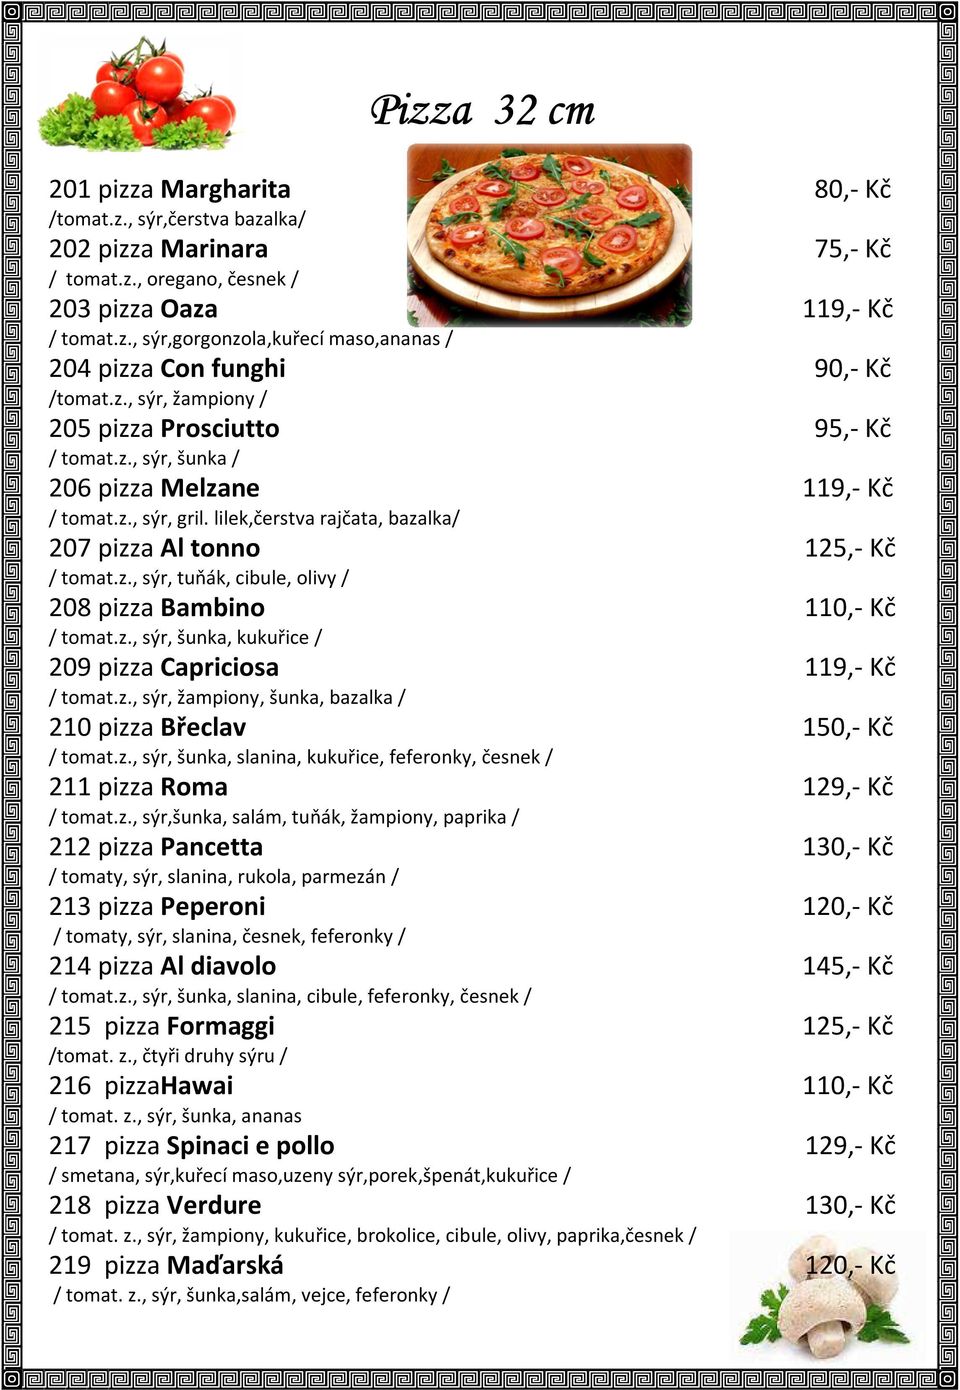 z., sýr, šunka, kukuřice / 209 pizza Capriciosa 119,- Kč / tomat.z., sýr, žampiony, šunka, bazalka / 210 pizza Břeclav 150,- Kč / tomat.z., sýr, šunka, slanina, kukuřice, feferonky, česnek / 211 pizza Roma 129,- Kč / tomat.